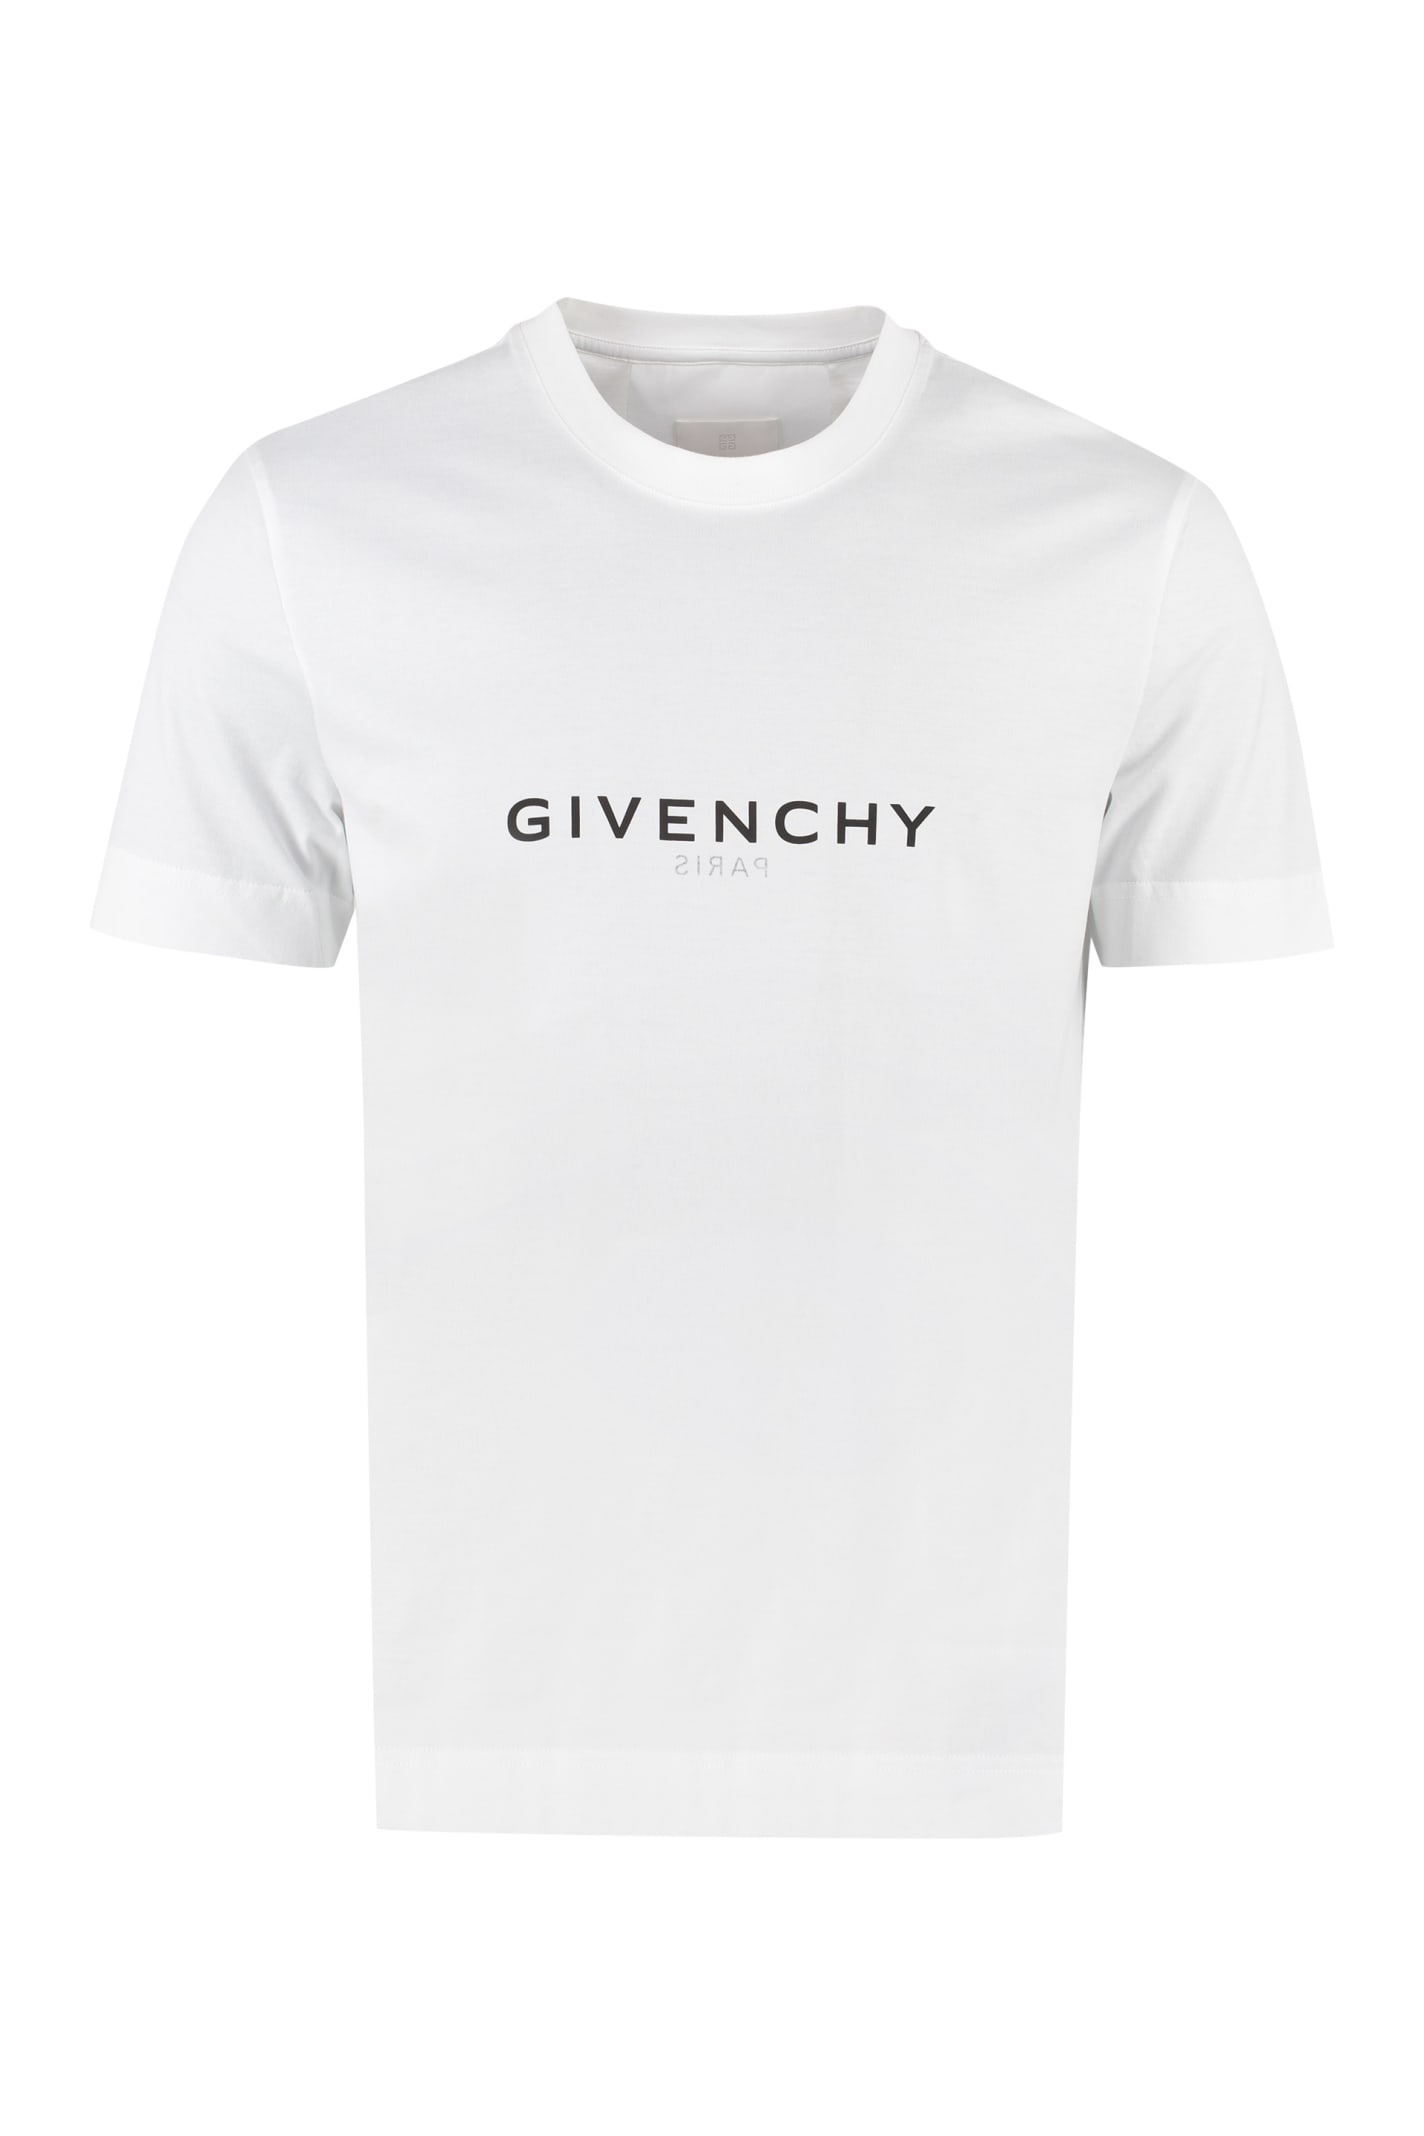 Givenchy Cotton Crew-neck T-shirt